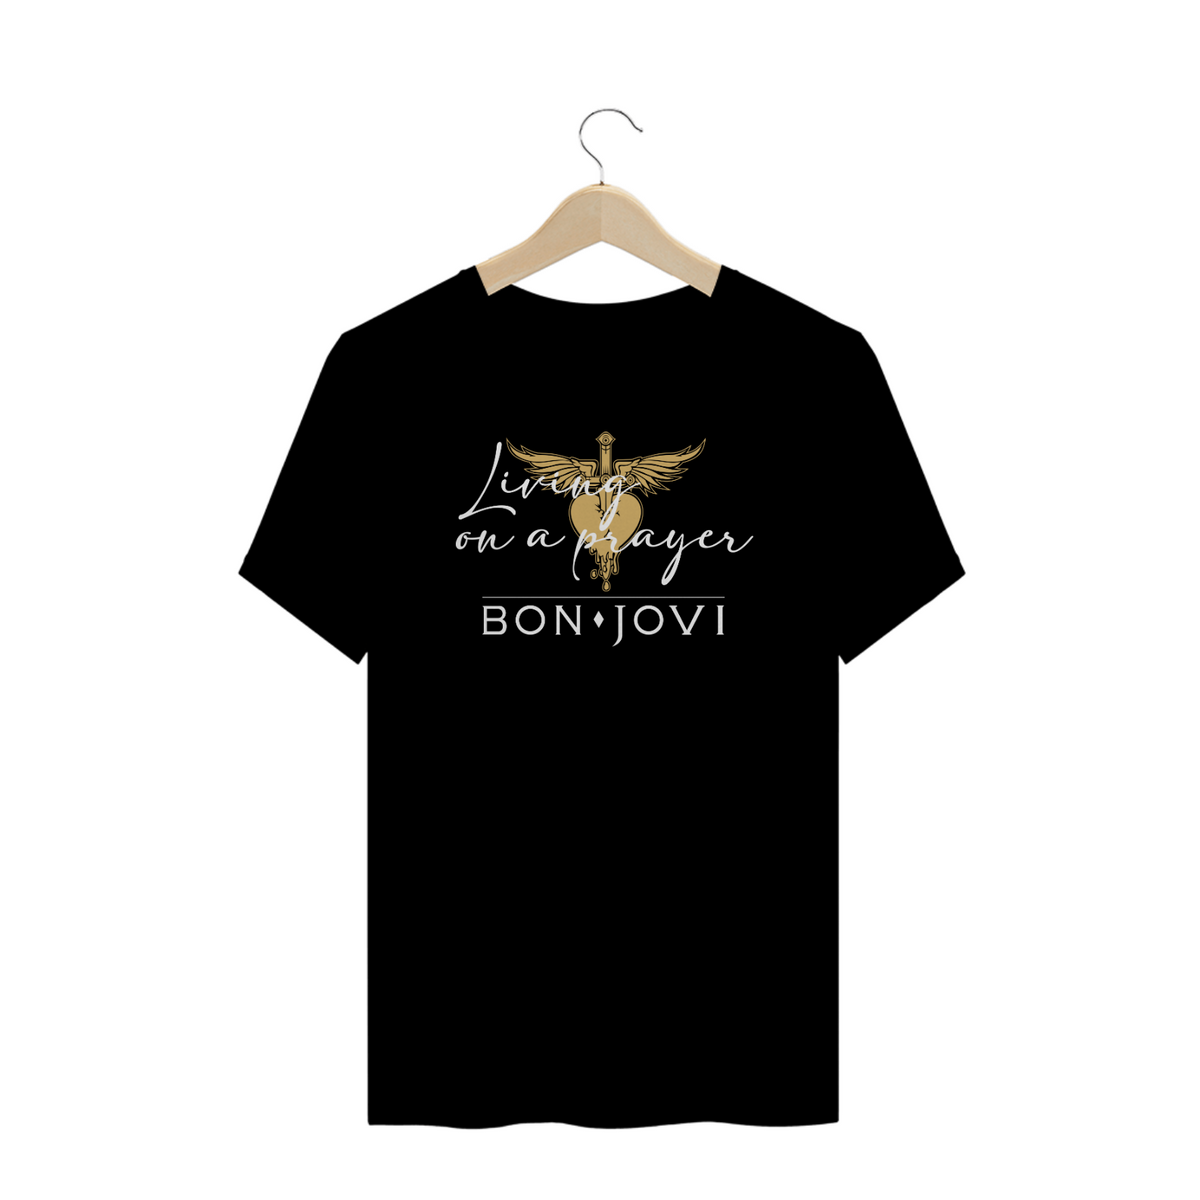 Nome do produto: Bon Jovi - Living on a Prayer 2